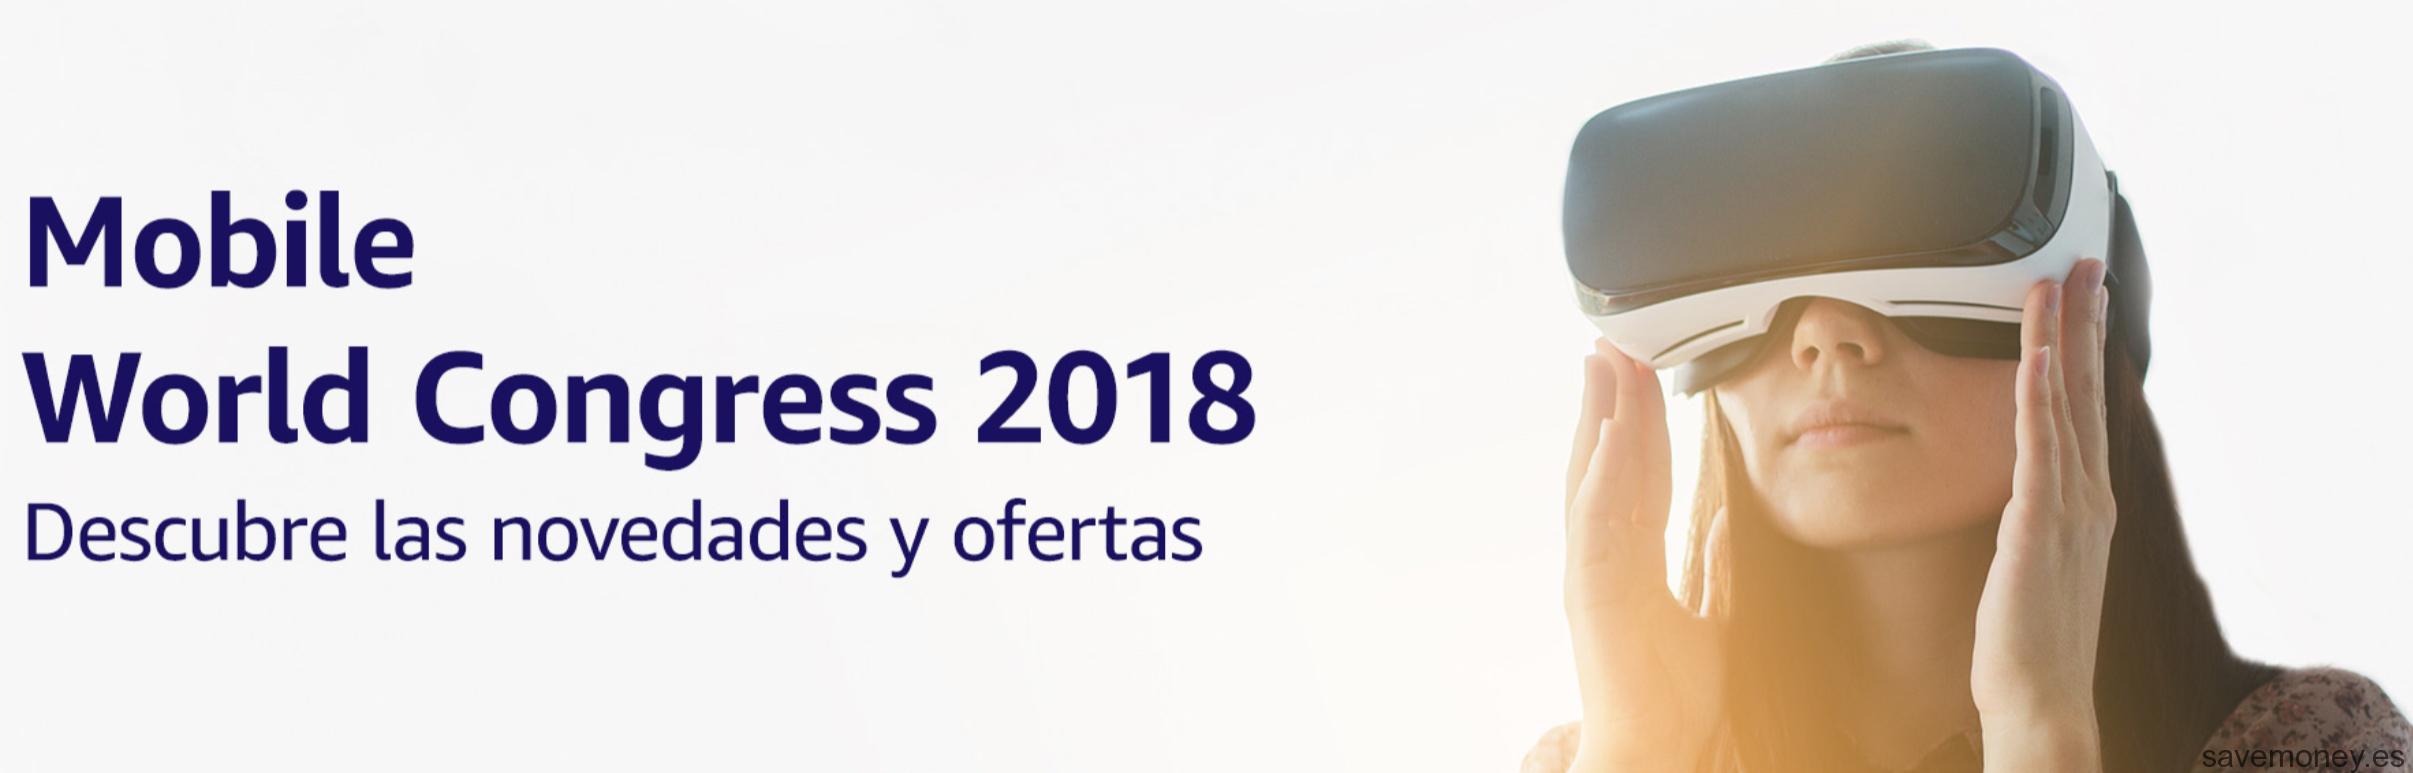 Mobile World Congress 2018: Las Mejores Ofertas en Amazon